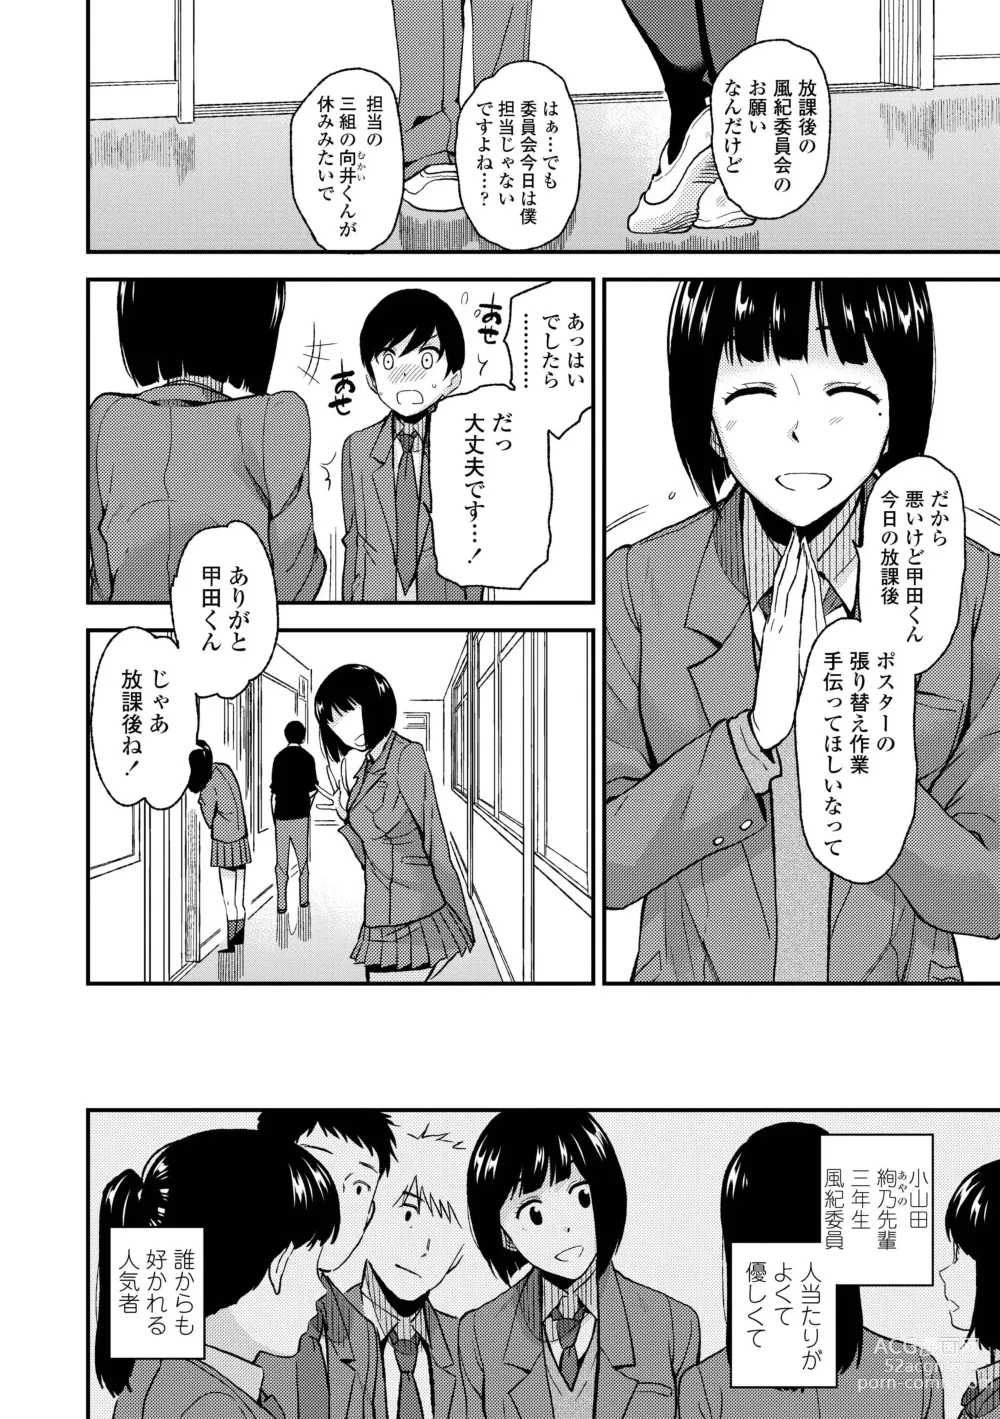 Page 156 of manga BorderLine